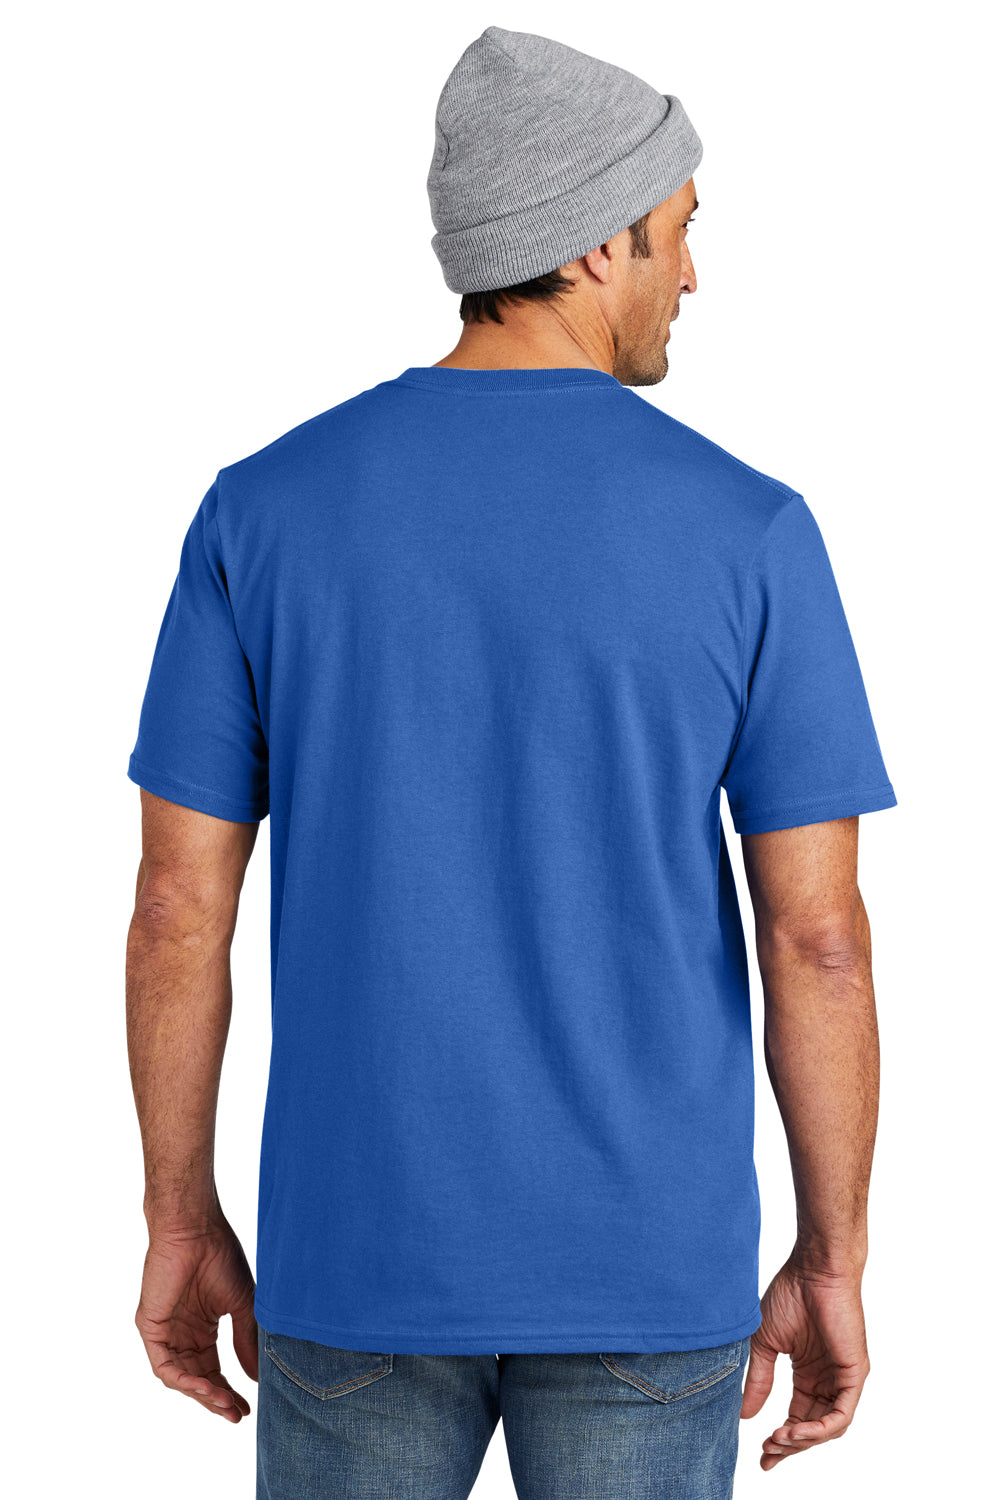 Volunteer Knitwear VL100P USA Made All American Short Sleeve Crewneck T-Shirt w/ Pocket True Royal Blue Back